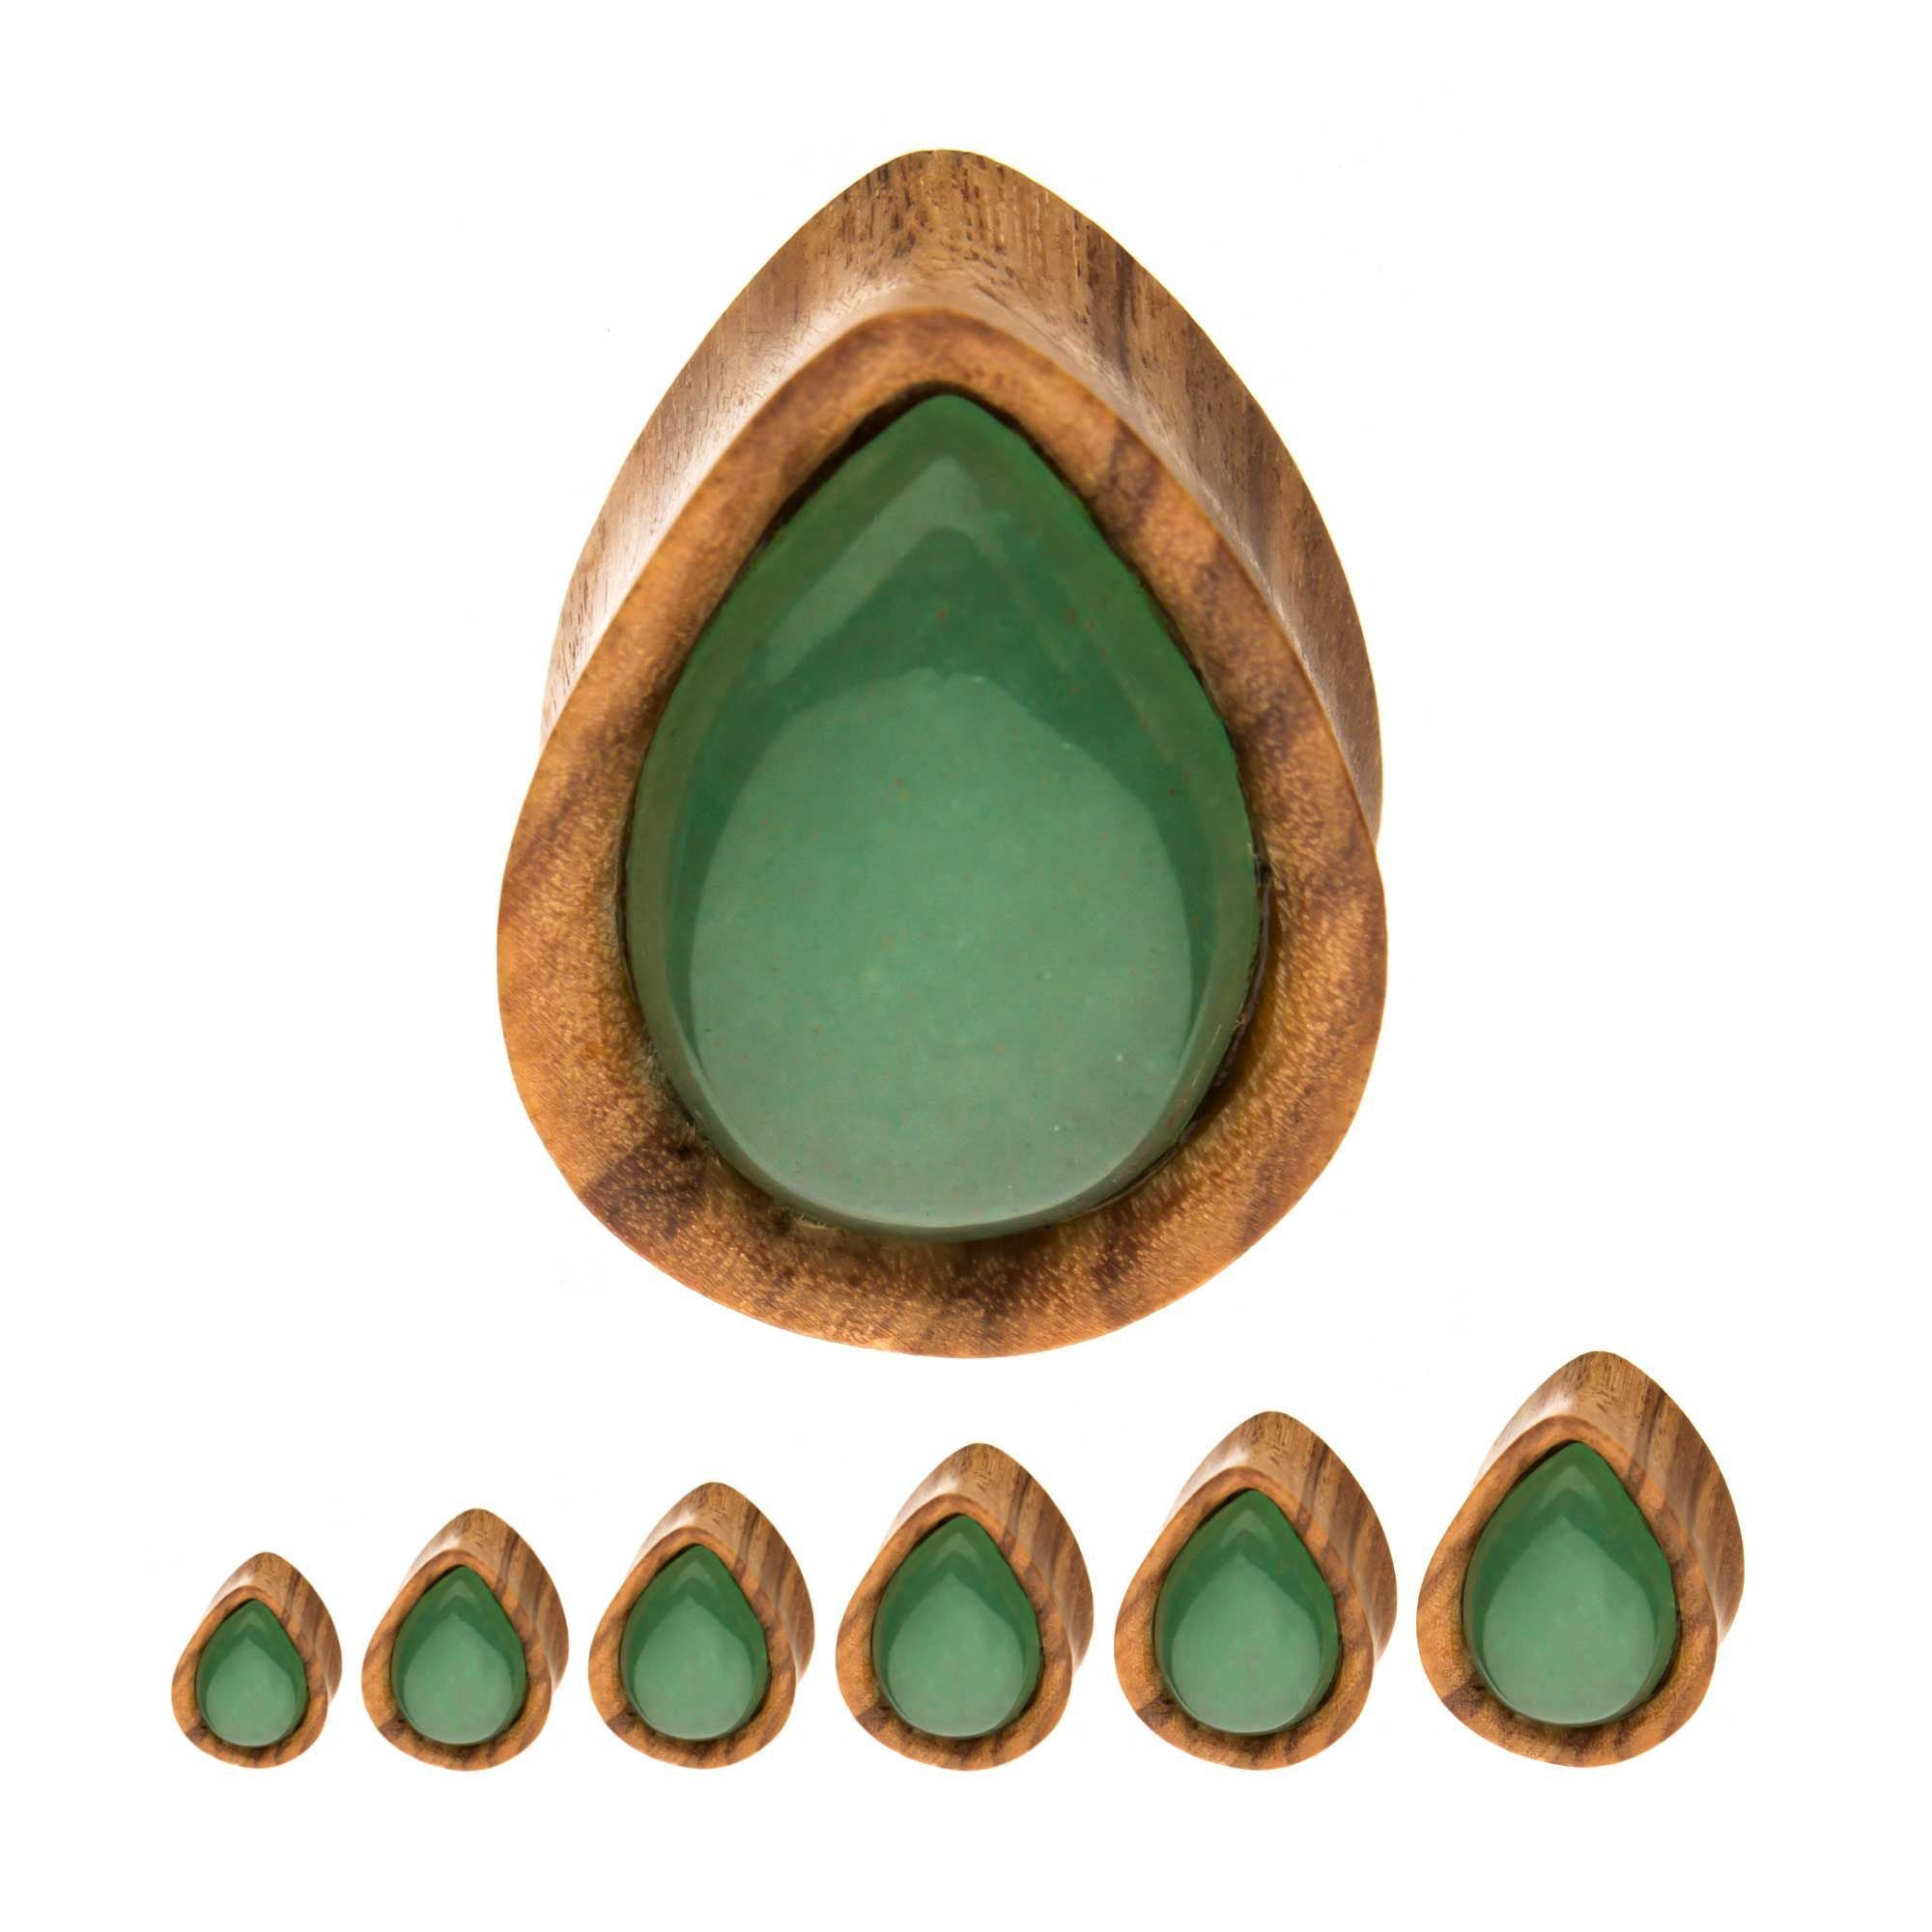 Olive Wood w/ Green Adventurine Stone Teardrop Plugs - 1 Pair sbvwpltg